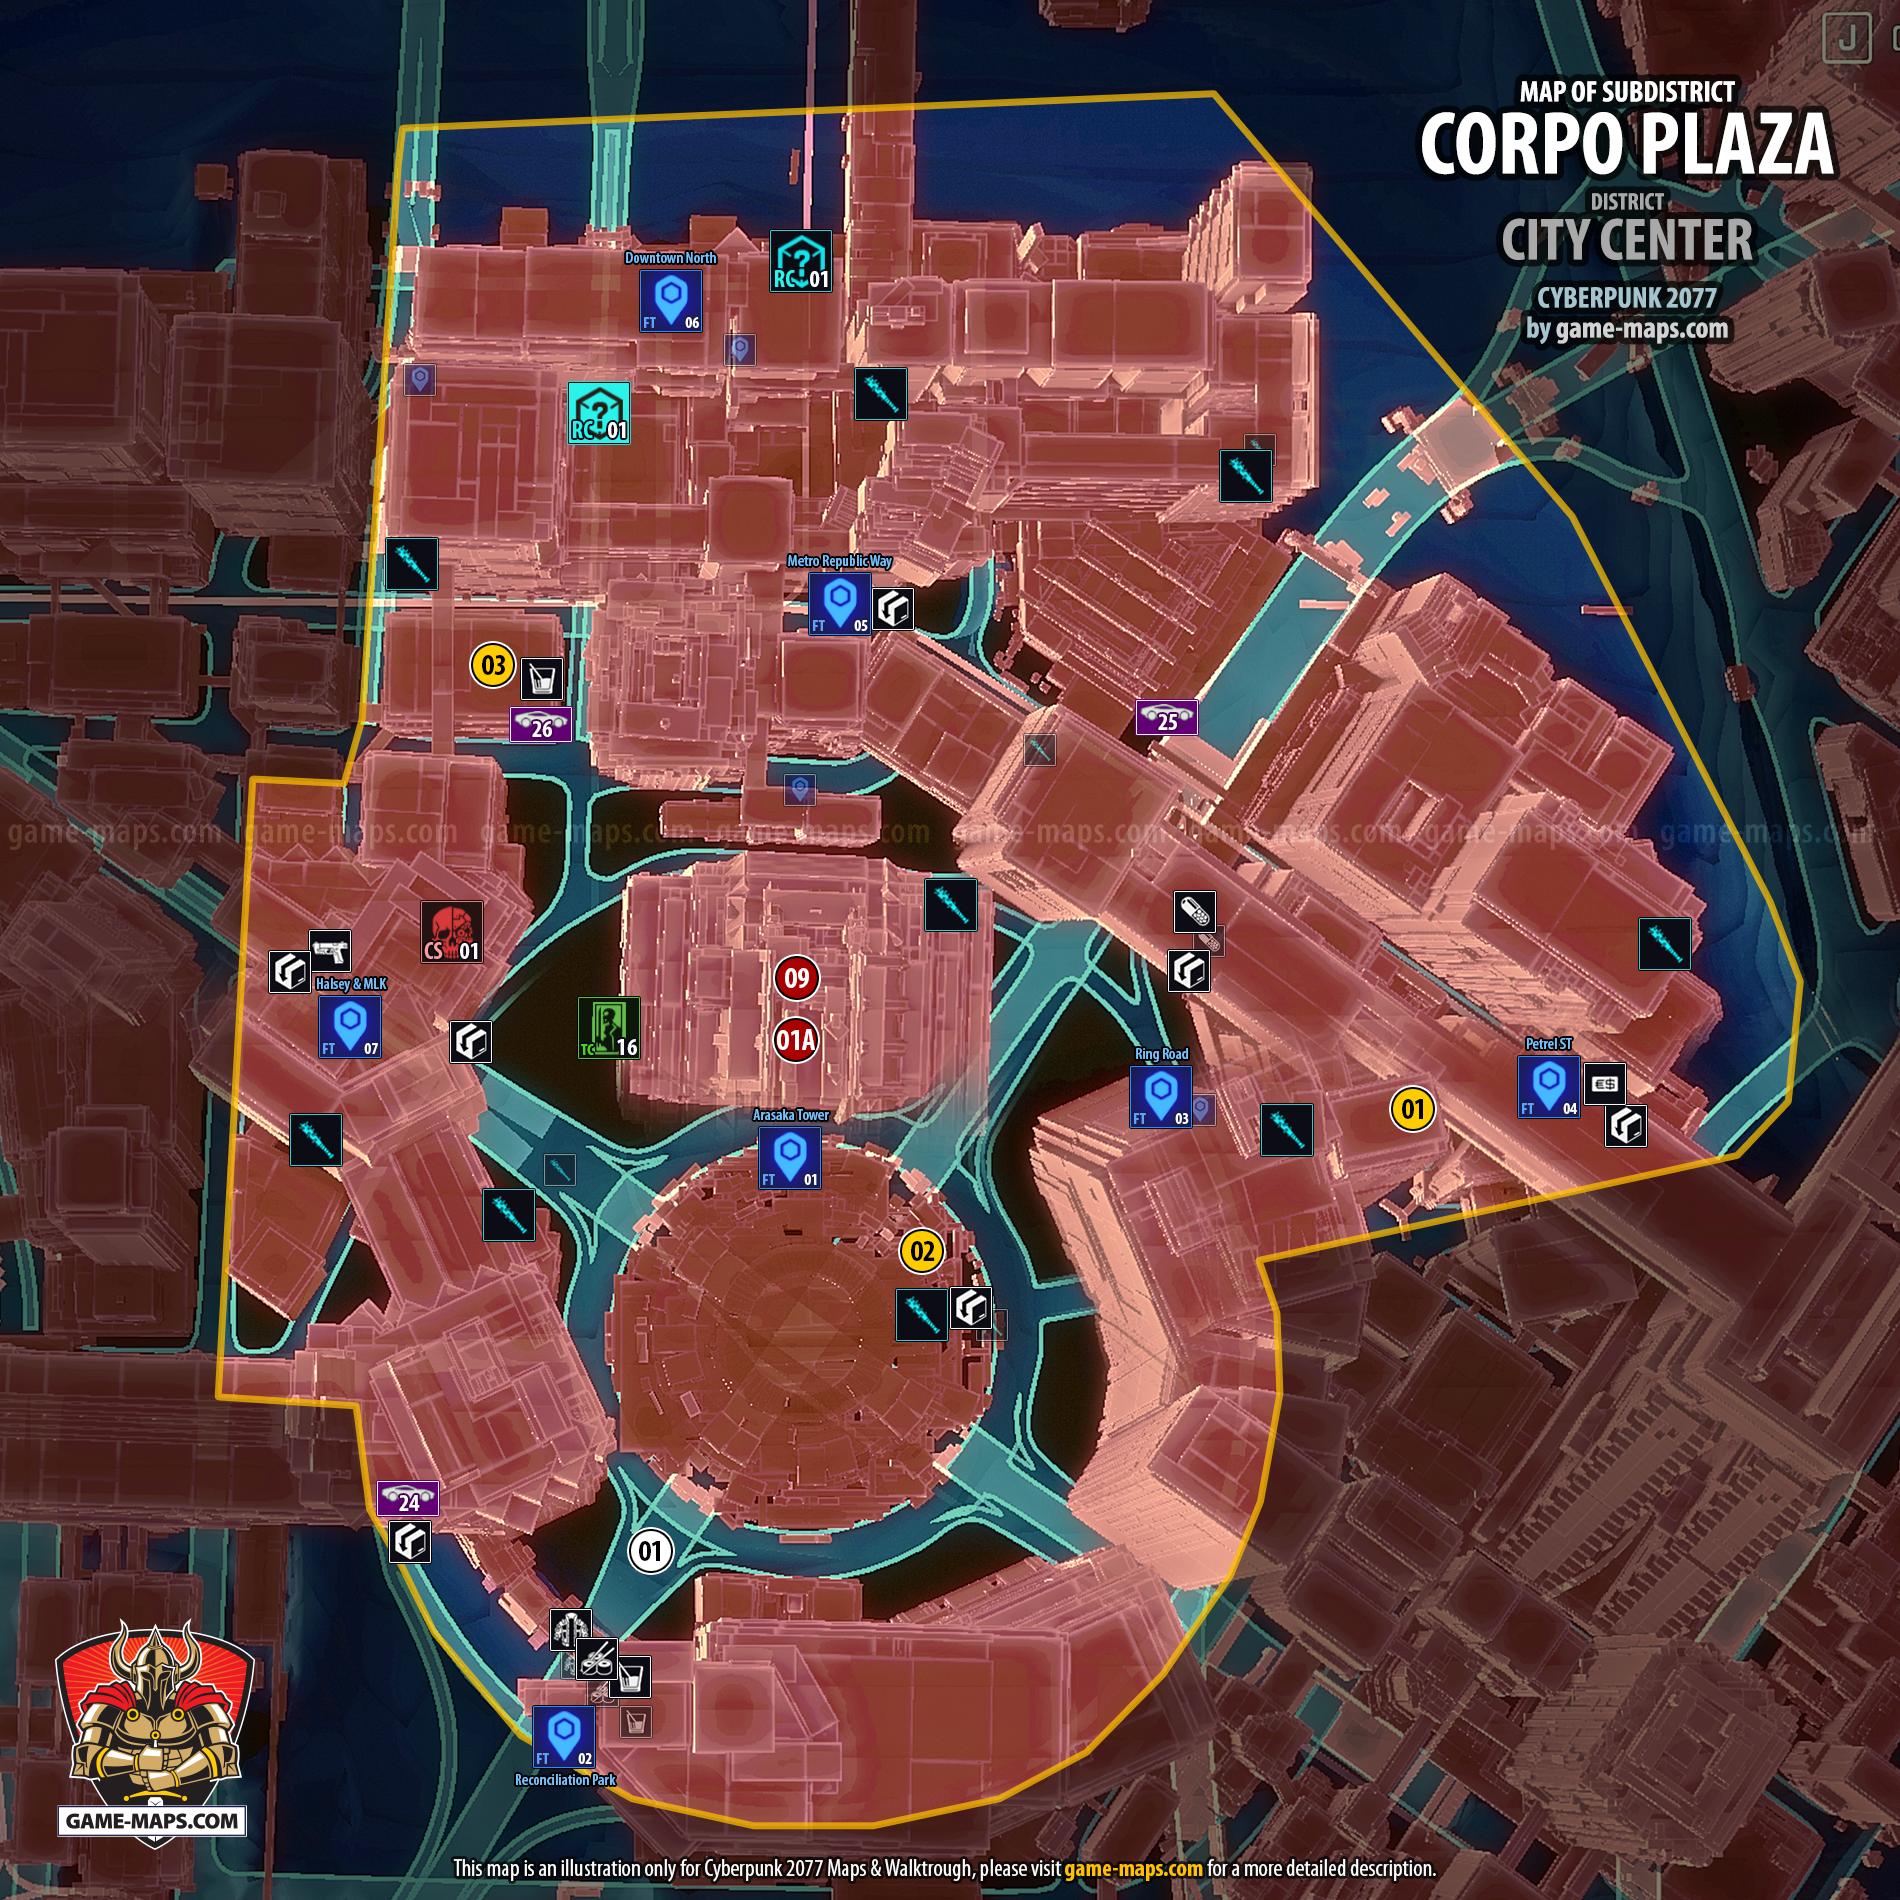 Corpo Plaza Map in City Center District - Cyberpunk 2077